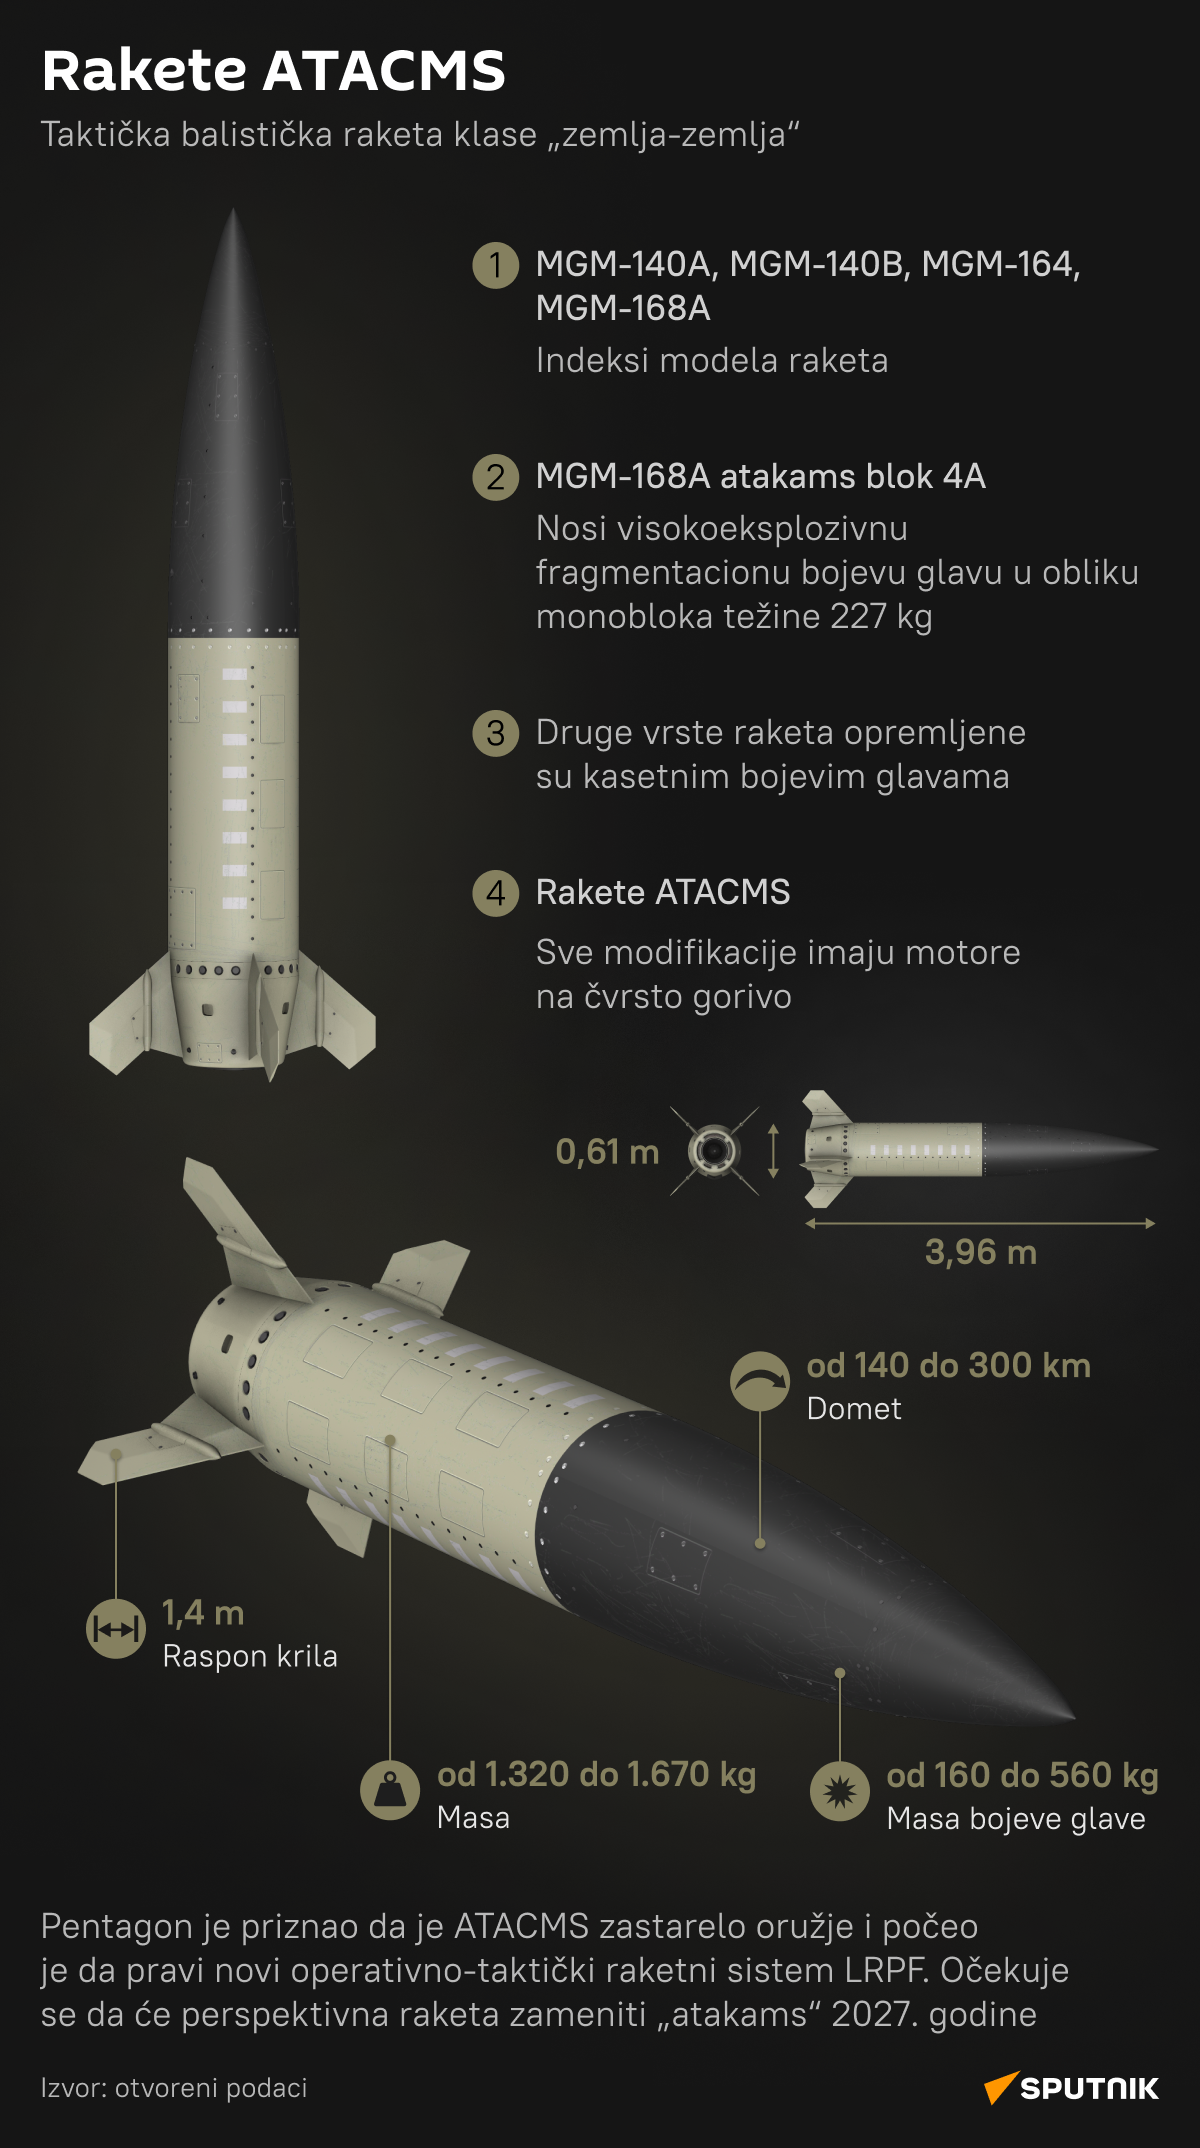 Infografika Rakete ATACMS LATINICA desk - Sputnik Srbija